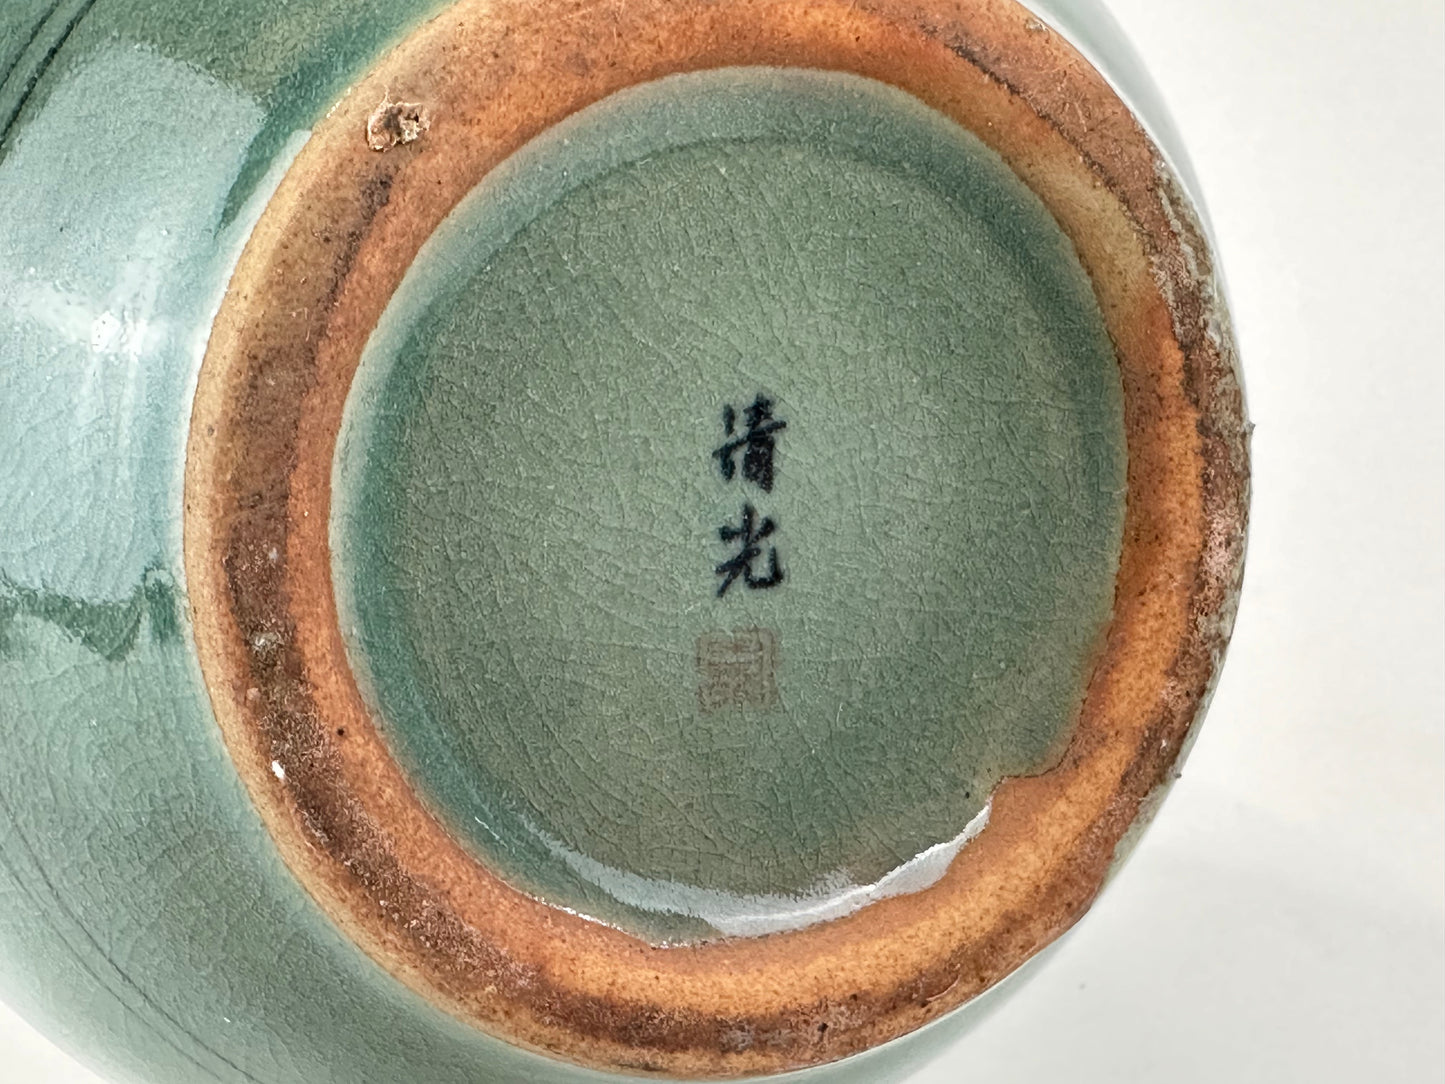 Pair of Vintage Japanese Vases Korean Goryeo Style Celadon Cranes 11" 清光